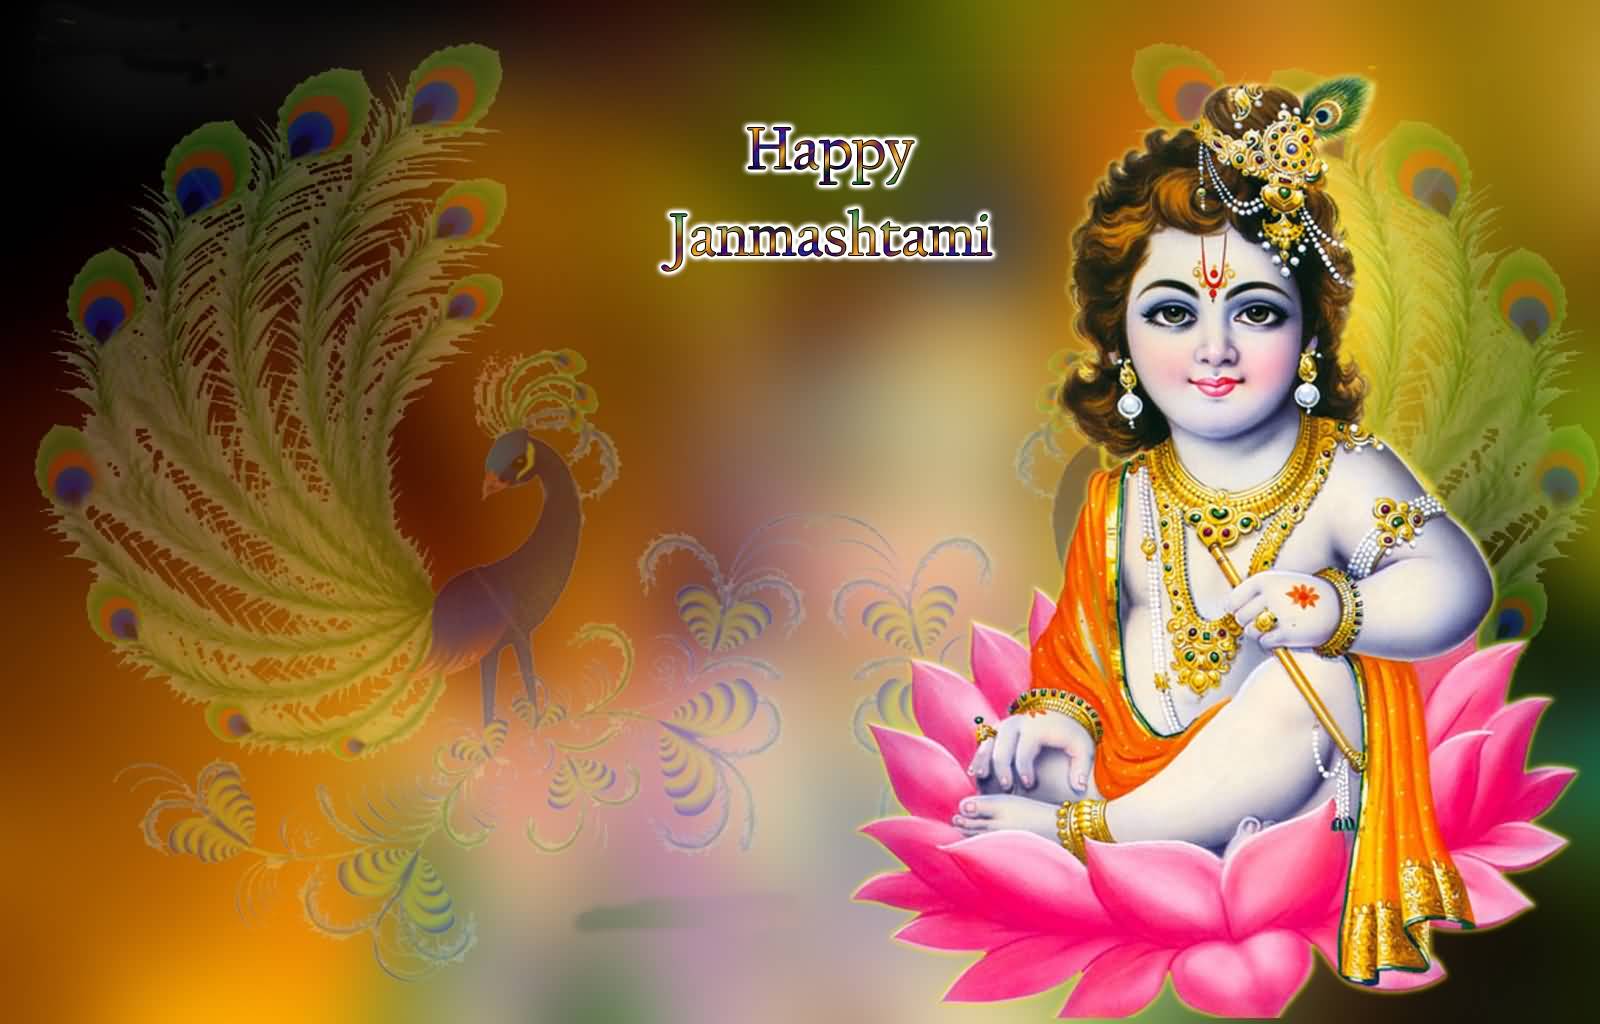 Happy Janmashtami Greetings Wallpaper Image